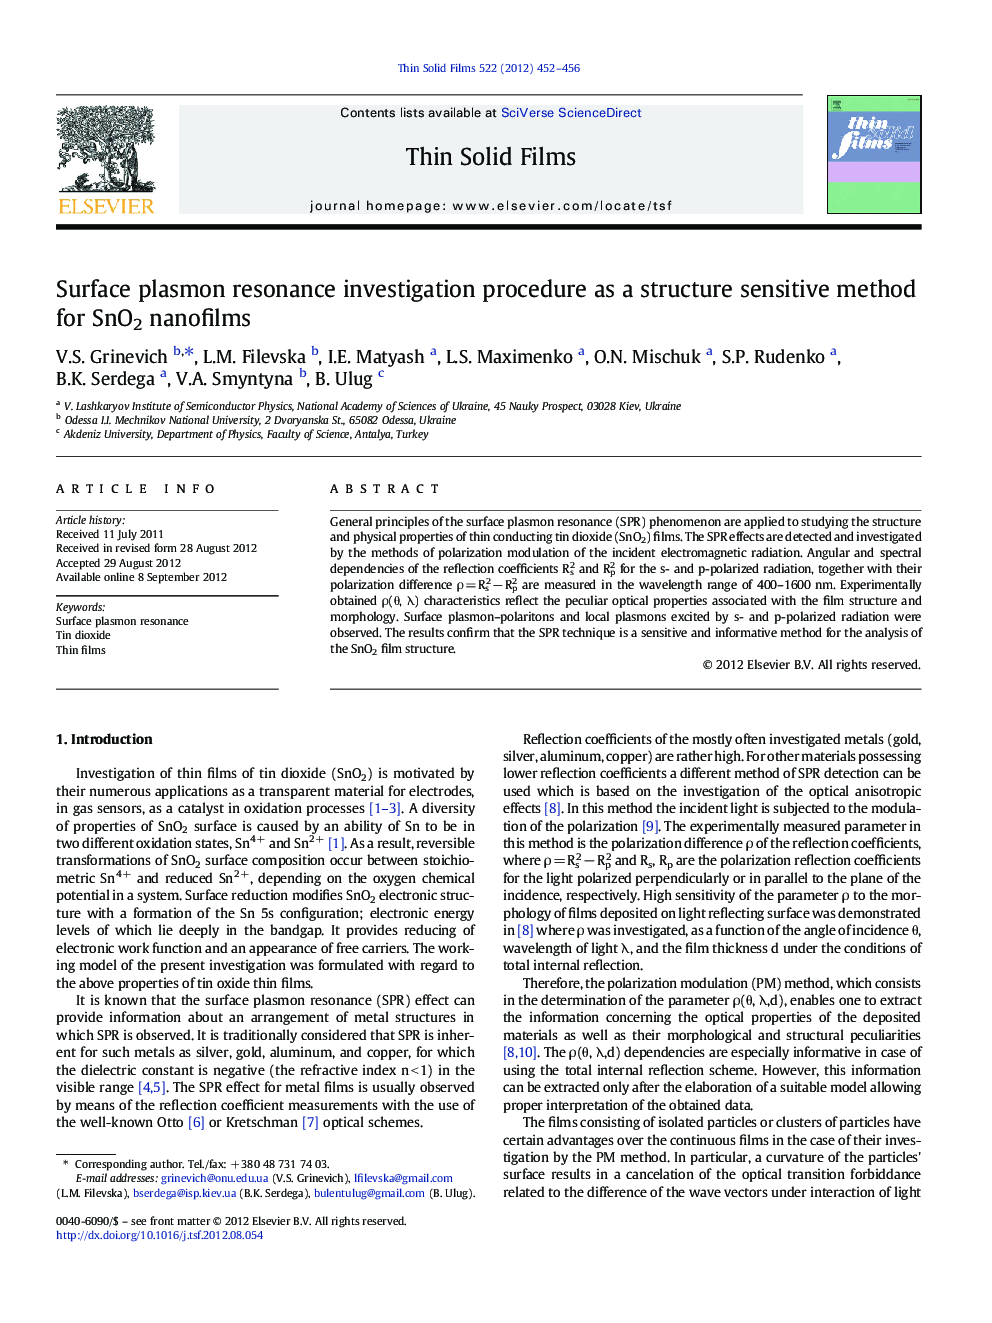 Surface plasmon resonance investigation procedure as a structure sensitive method for SnO2 nanofilms